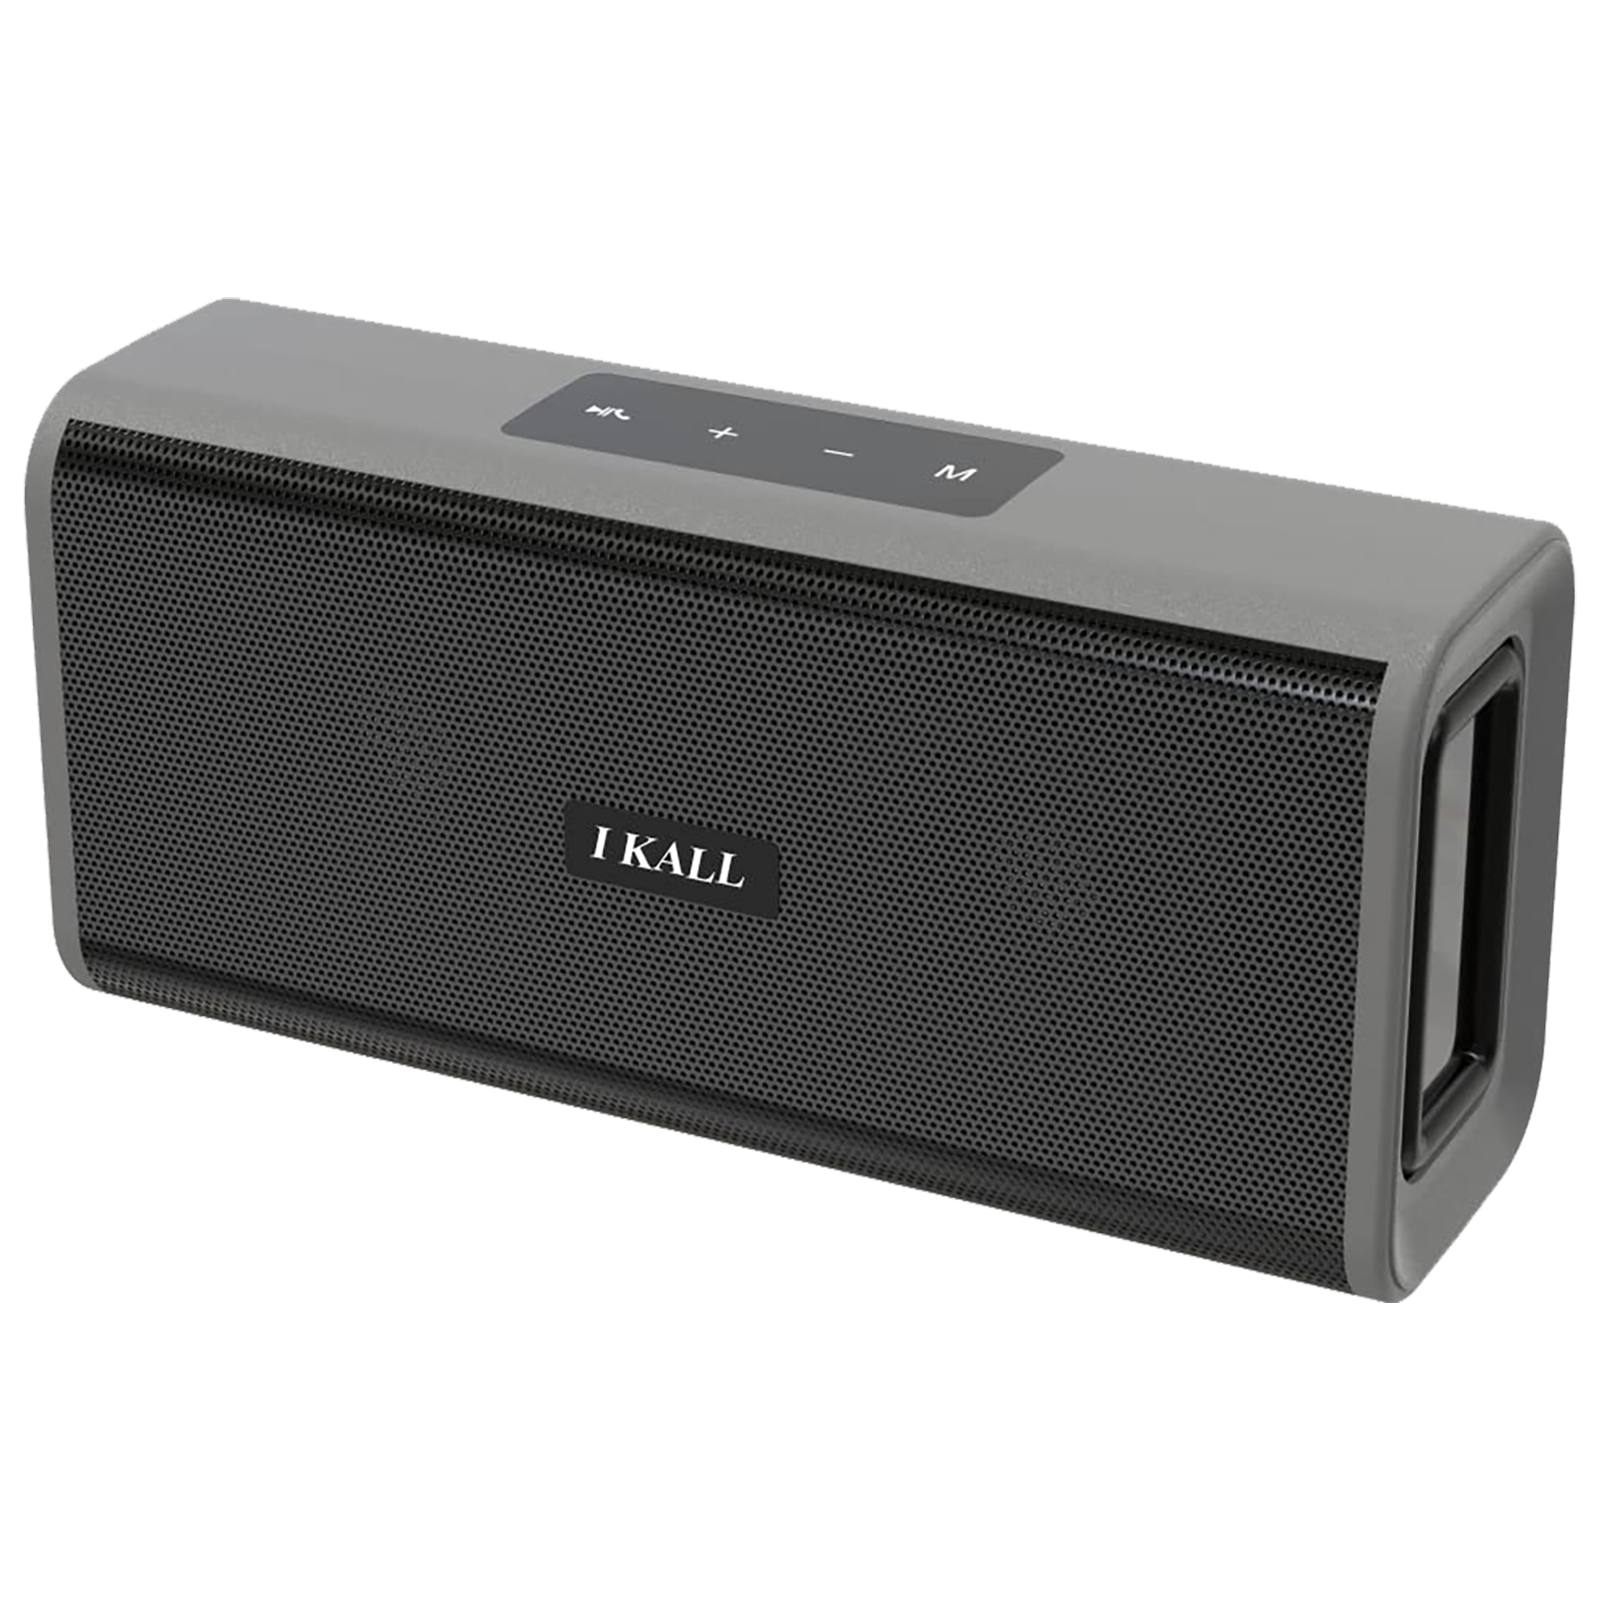 I KALL 5.0 Channel 10 Watts Portable Speaker (Analogue Tuning, BT102, Black)_1